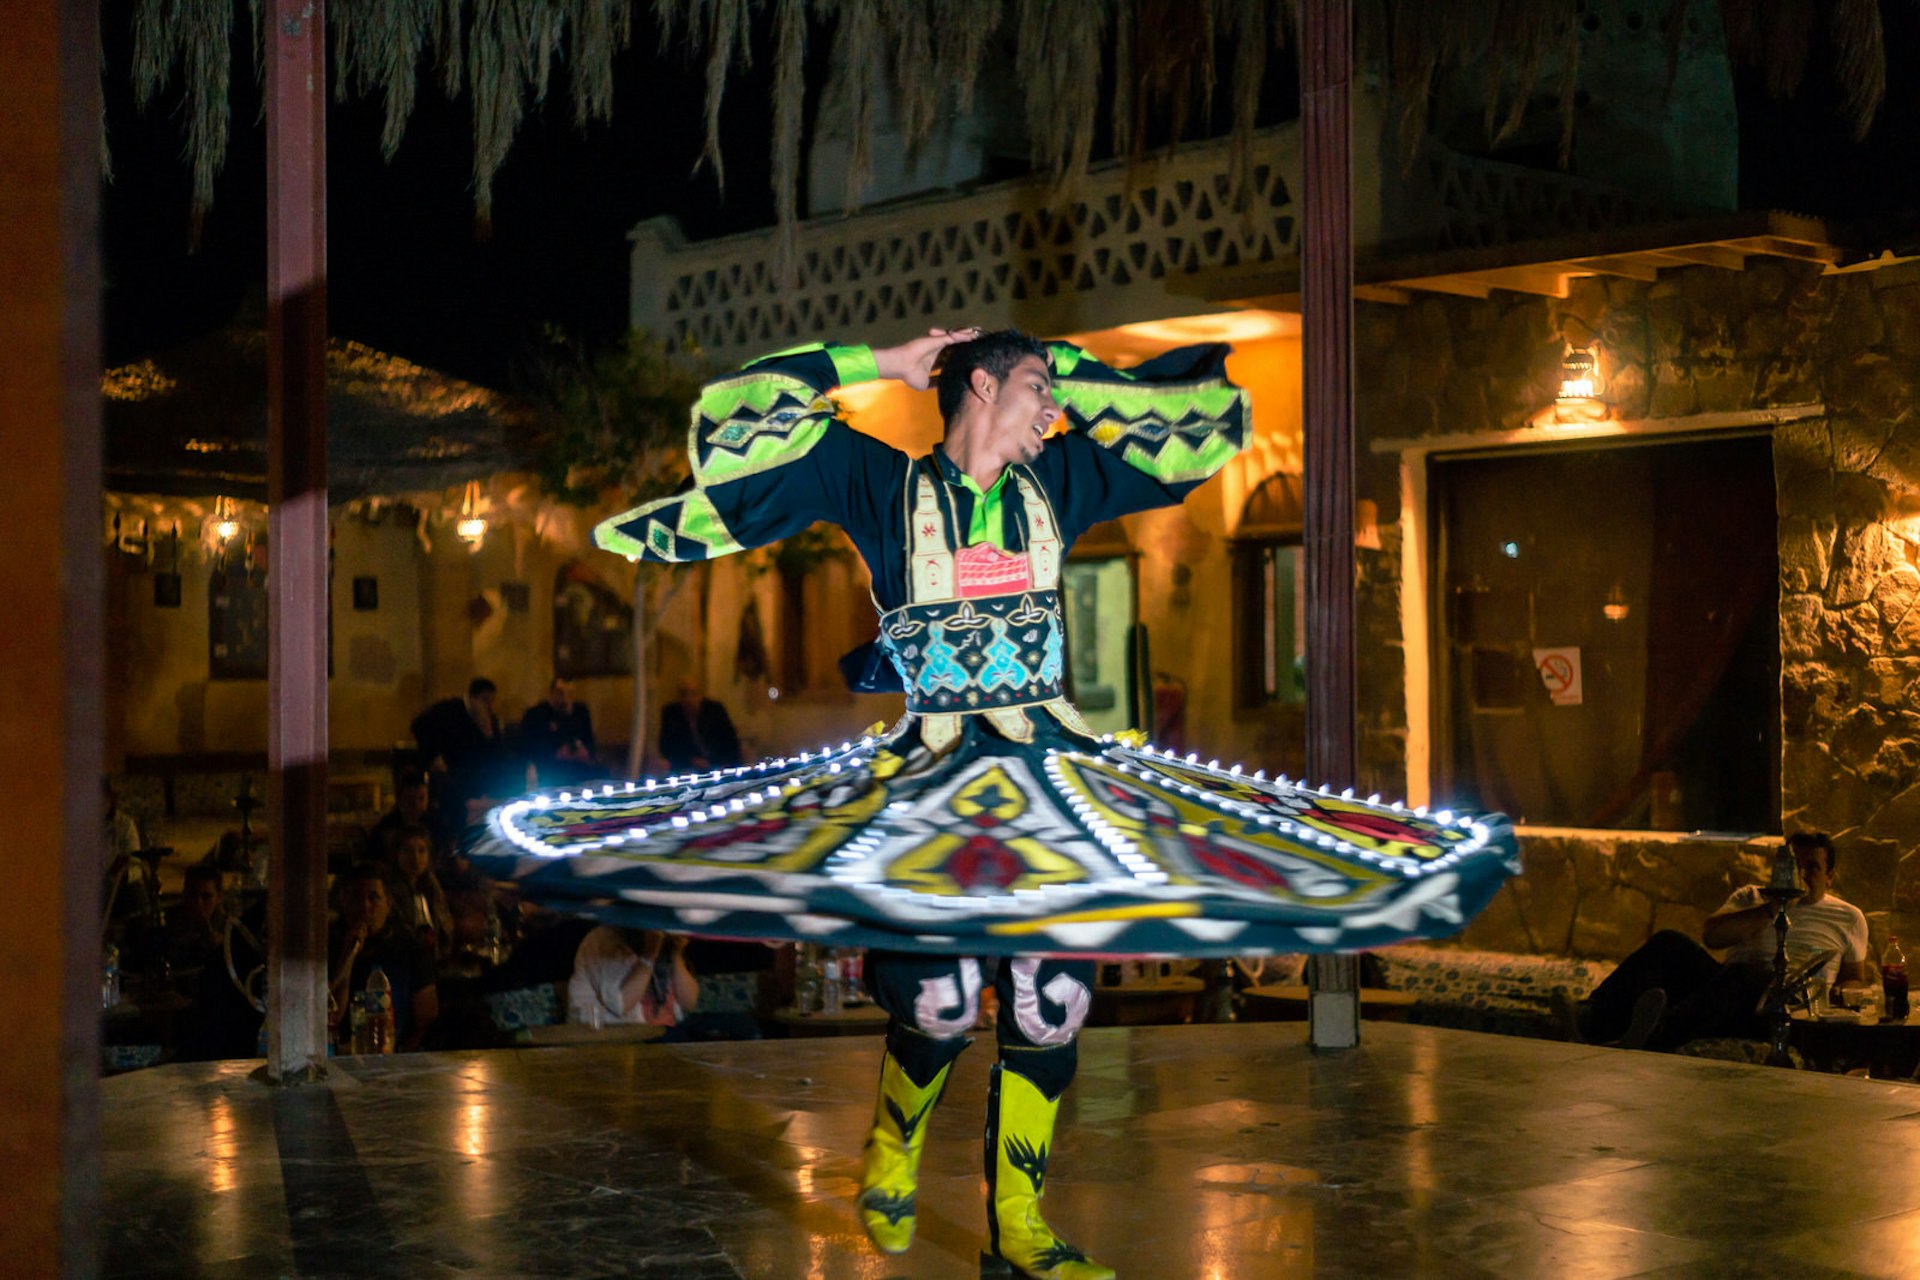 Tanoura dance performer. Image by Valerii Iavtushenko / Shutterstock